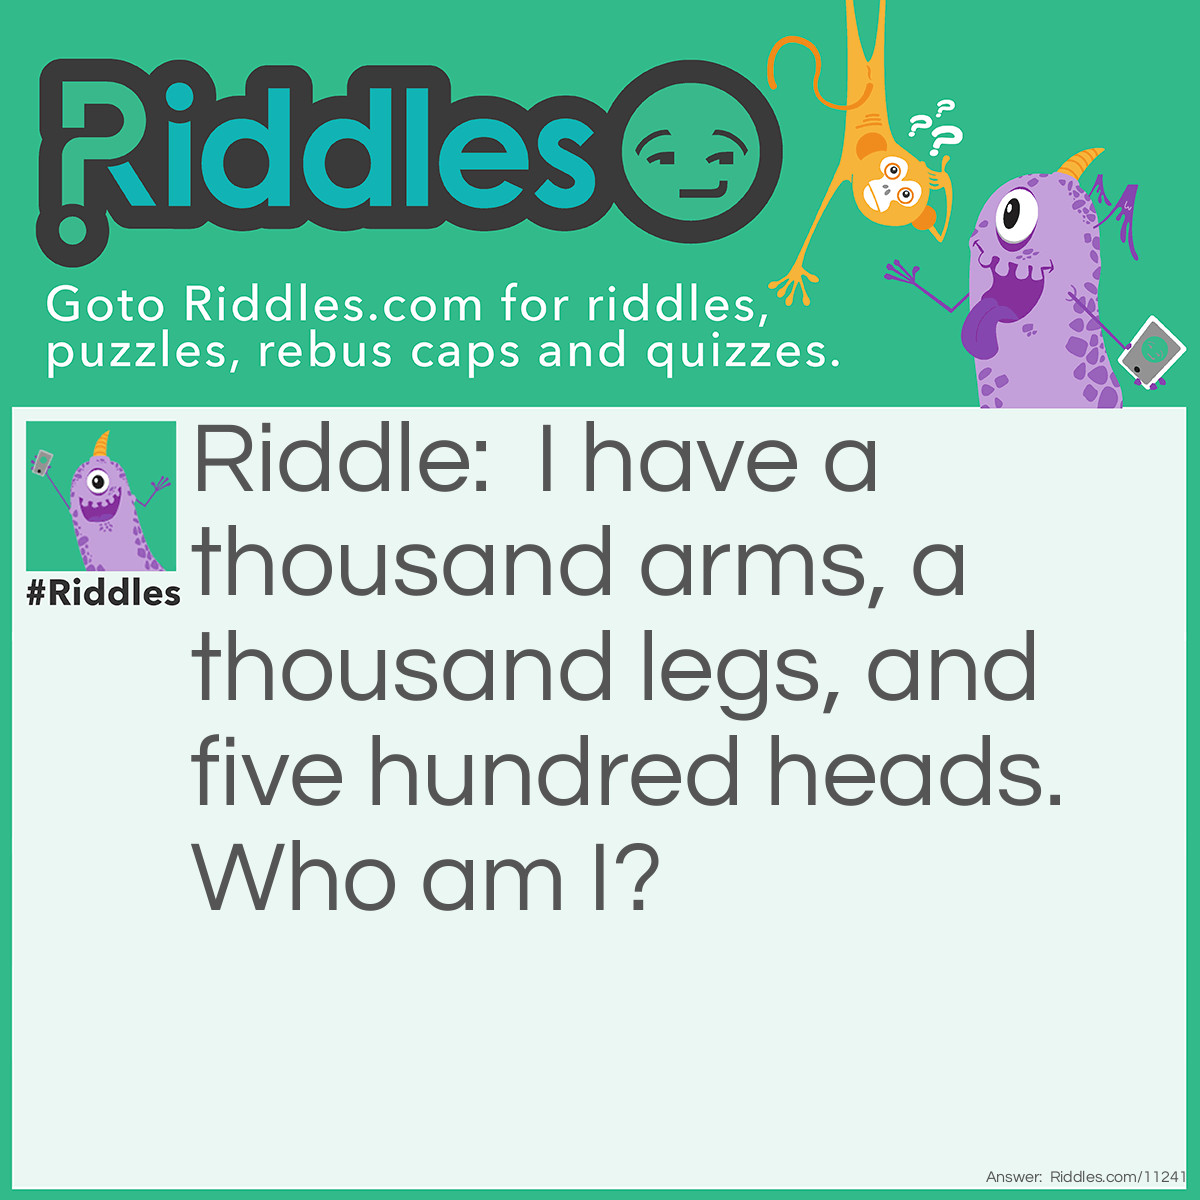 Riddle: I have a thousand arms, a thousand legs, and five hundred heads. Who am I? Answer: I am a liar.